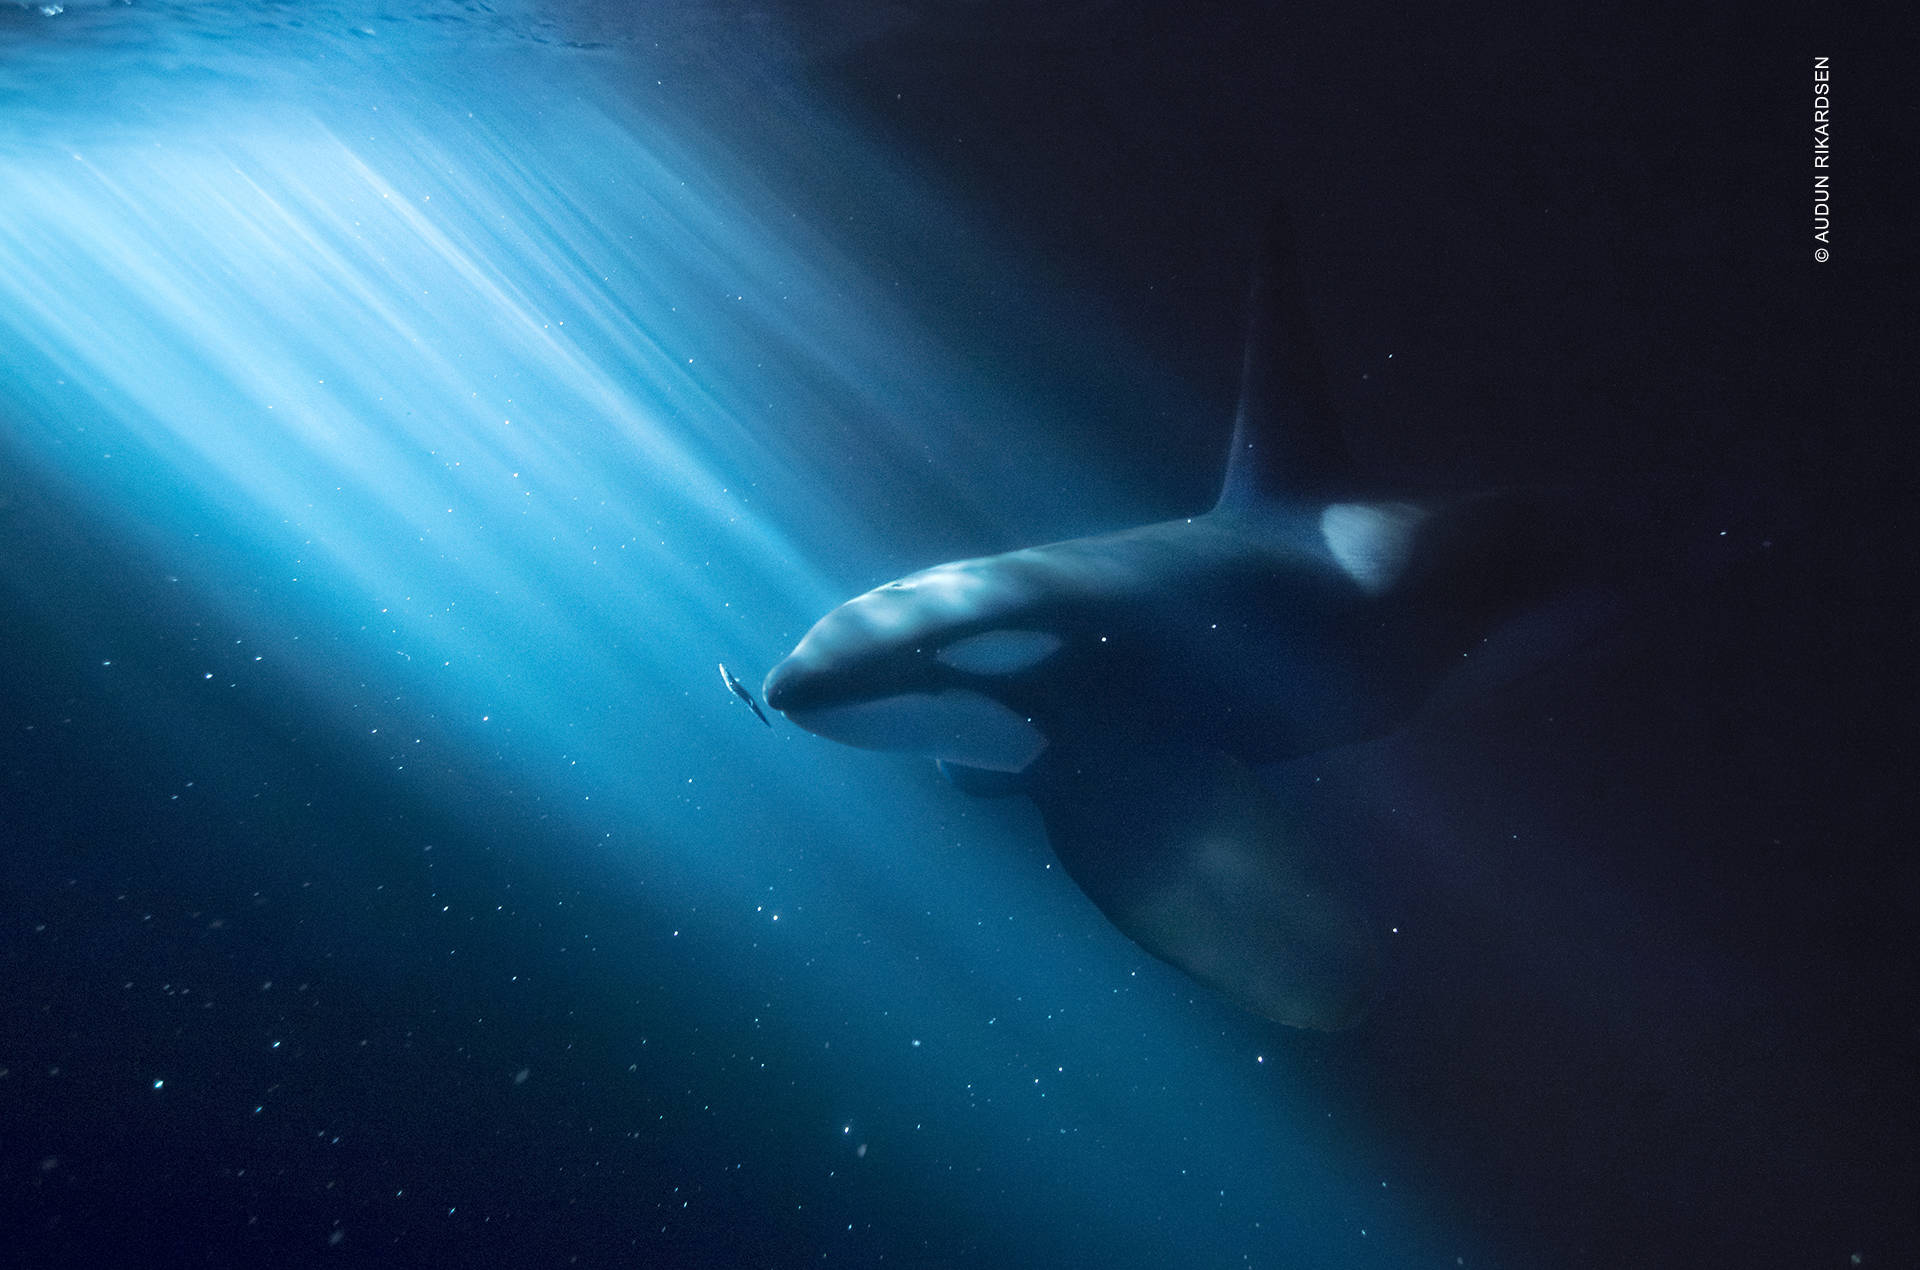 Orca Killer Whale In The Ocean Screen Saver Wallpaper